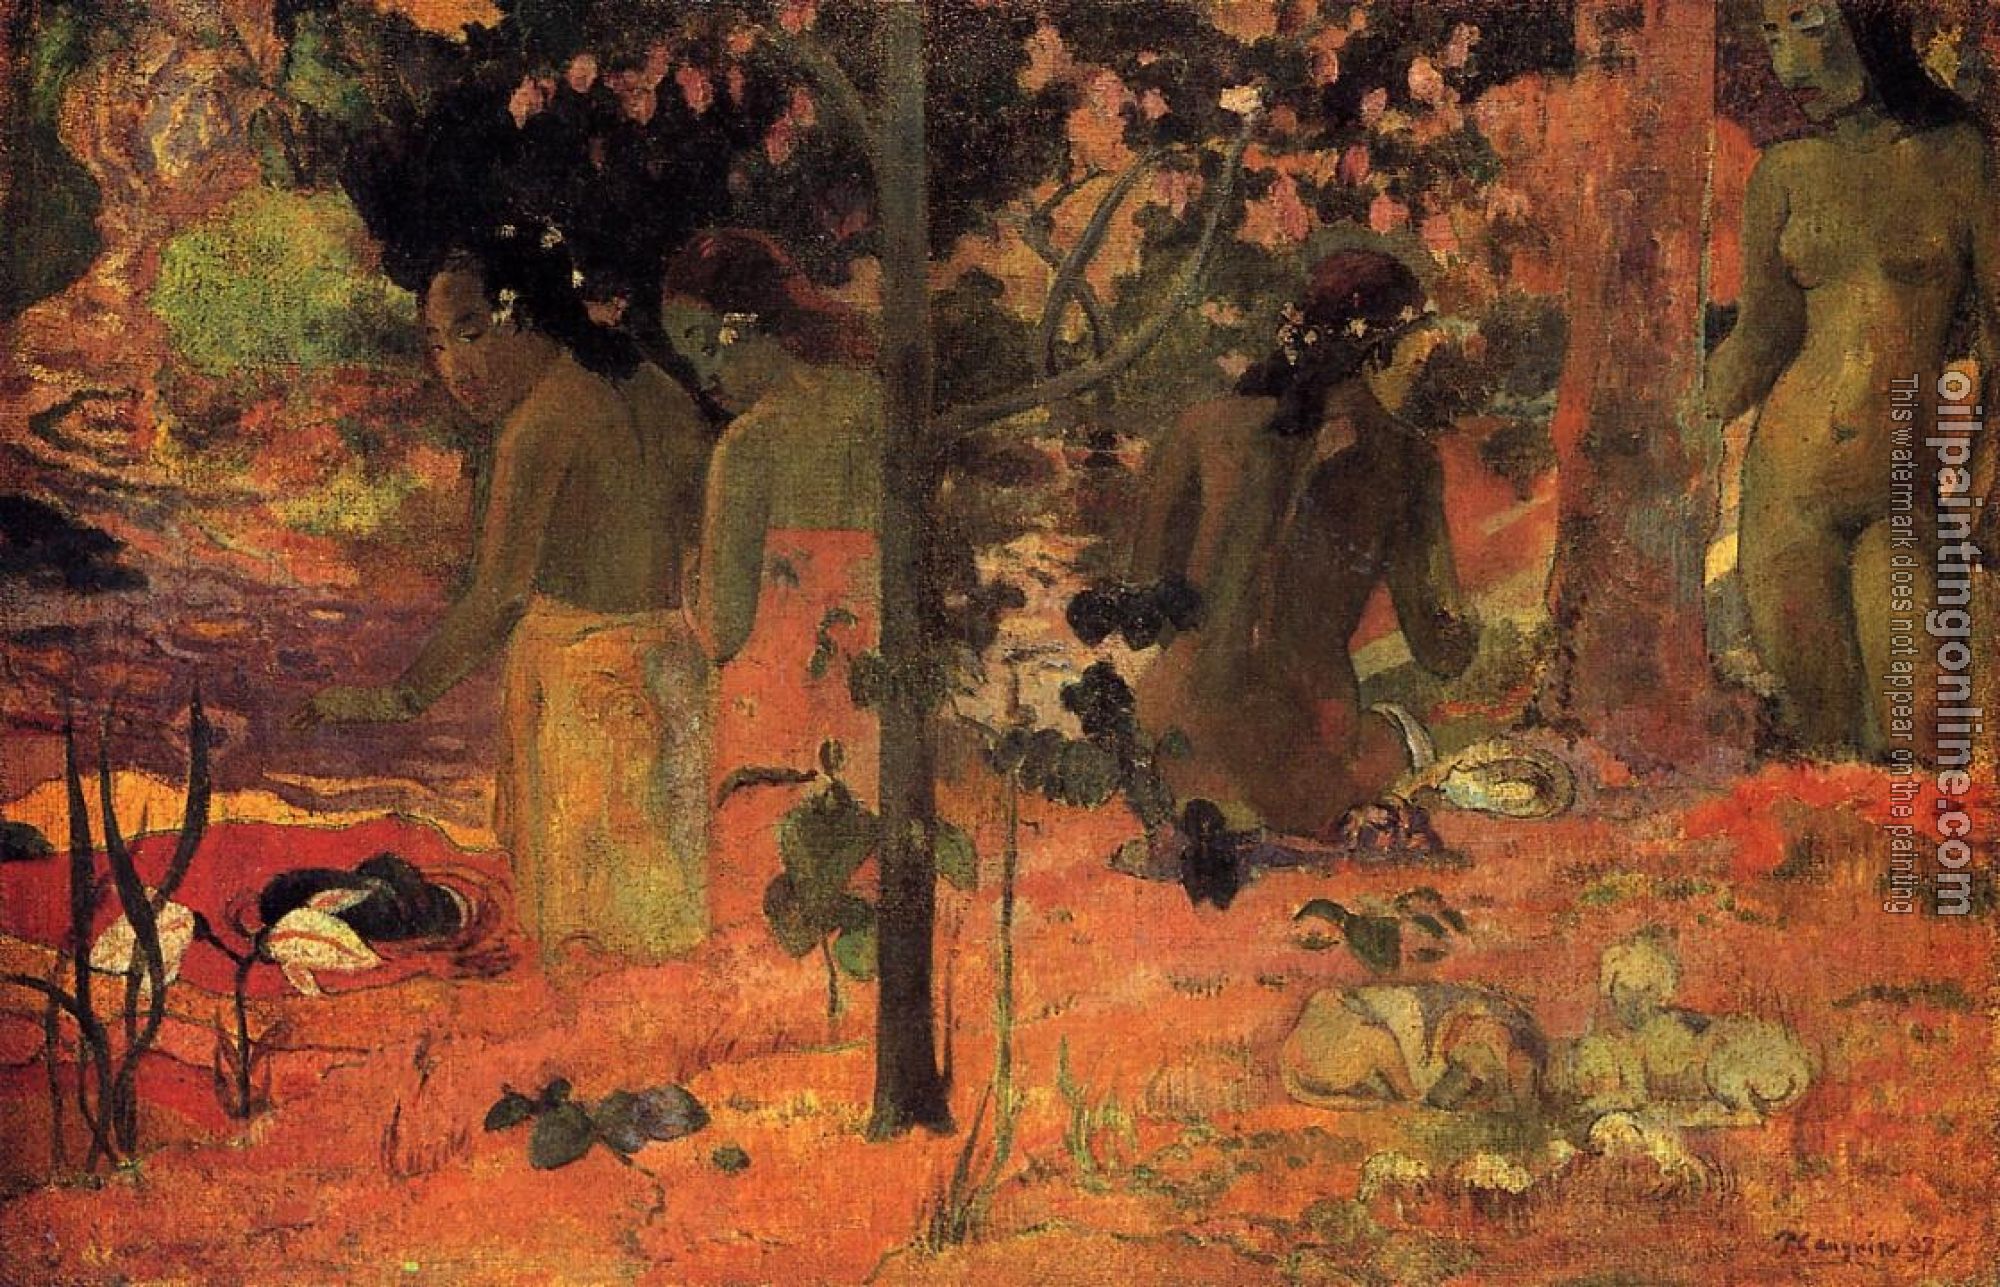 Gauguin, Paul - The Bathers